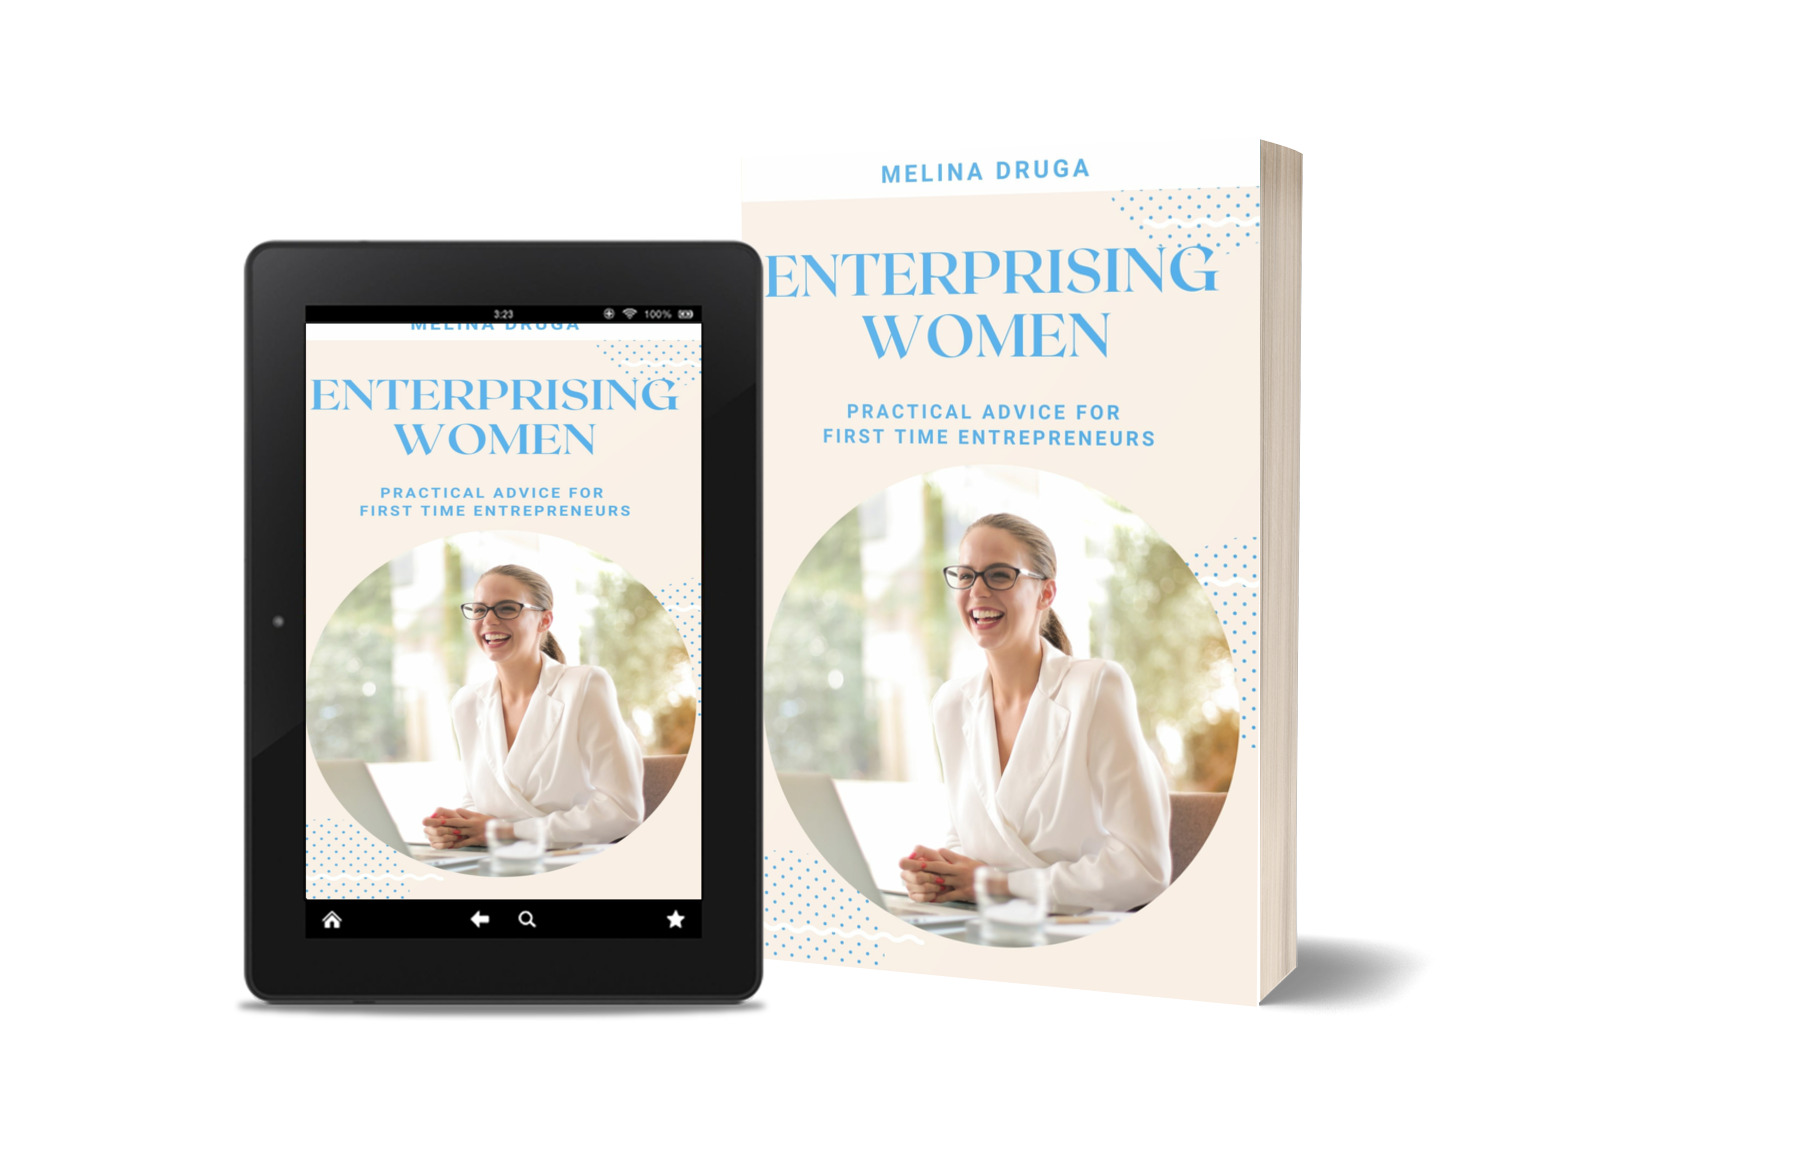 Enterprising Women: Practical Advice for First Time Entrepreneurs by Melina Druga